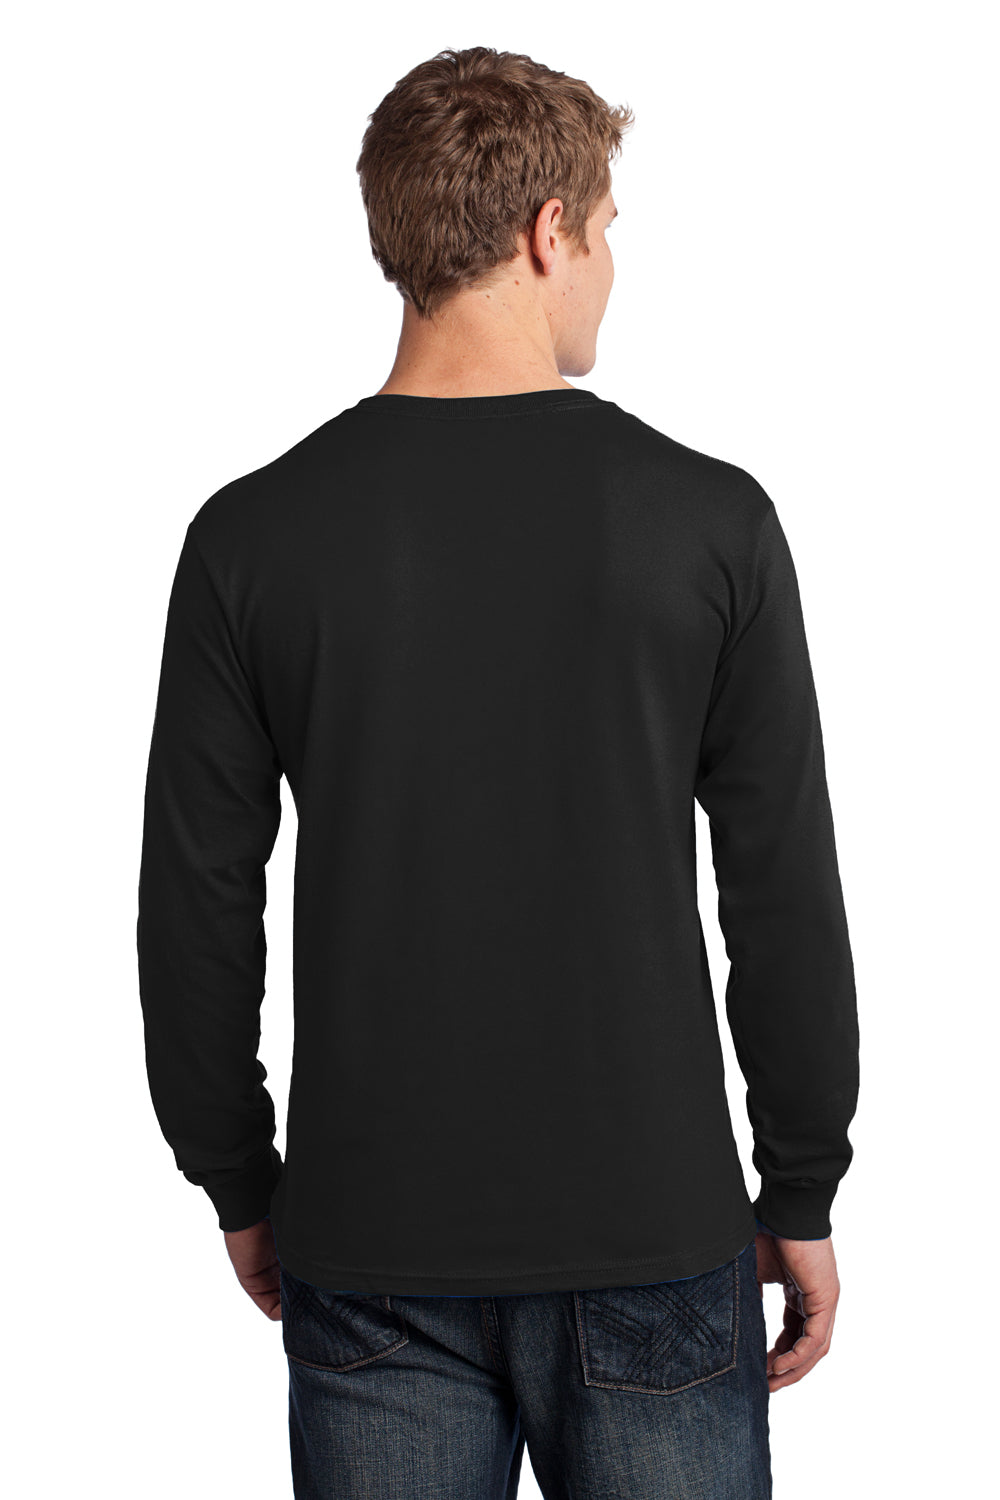 Port & Company PC54LS Mens Core Long Sleeve Crewneck T-Shirt Black Back